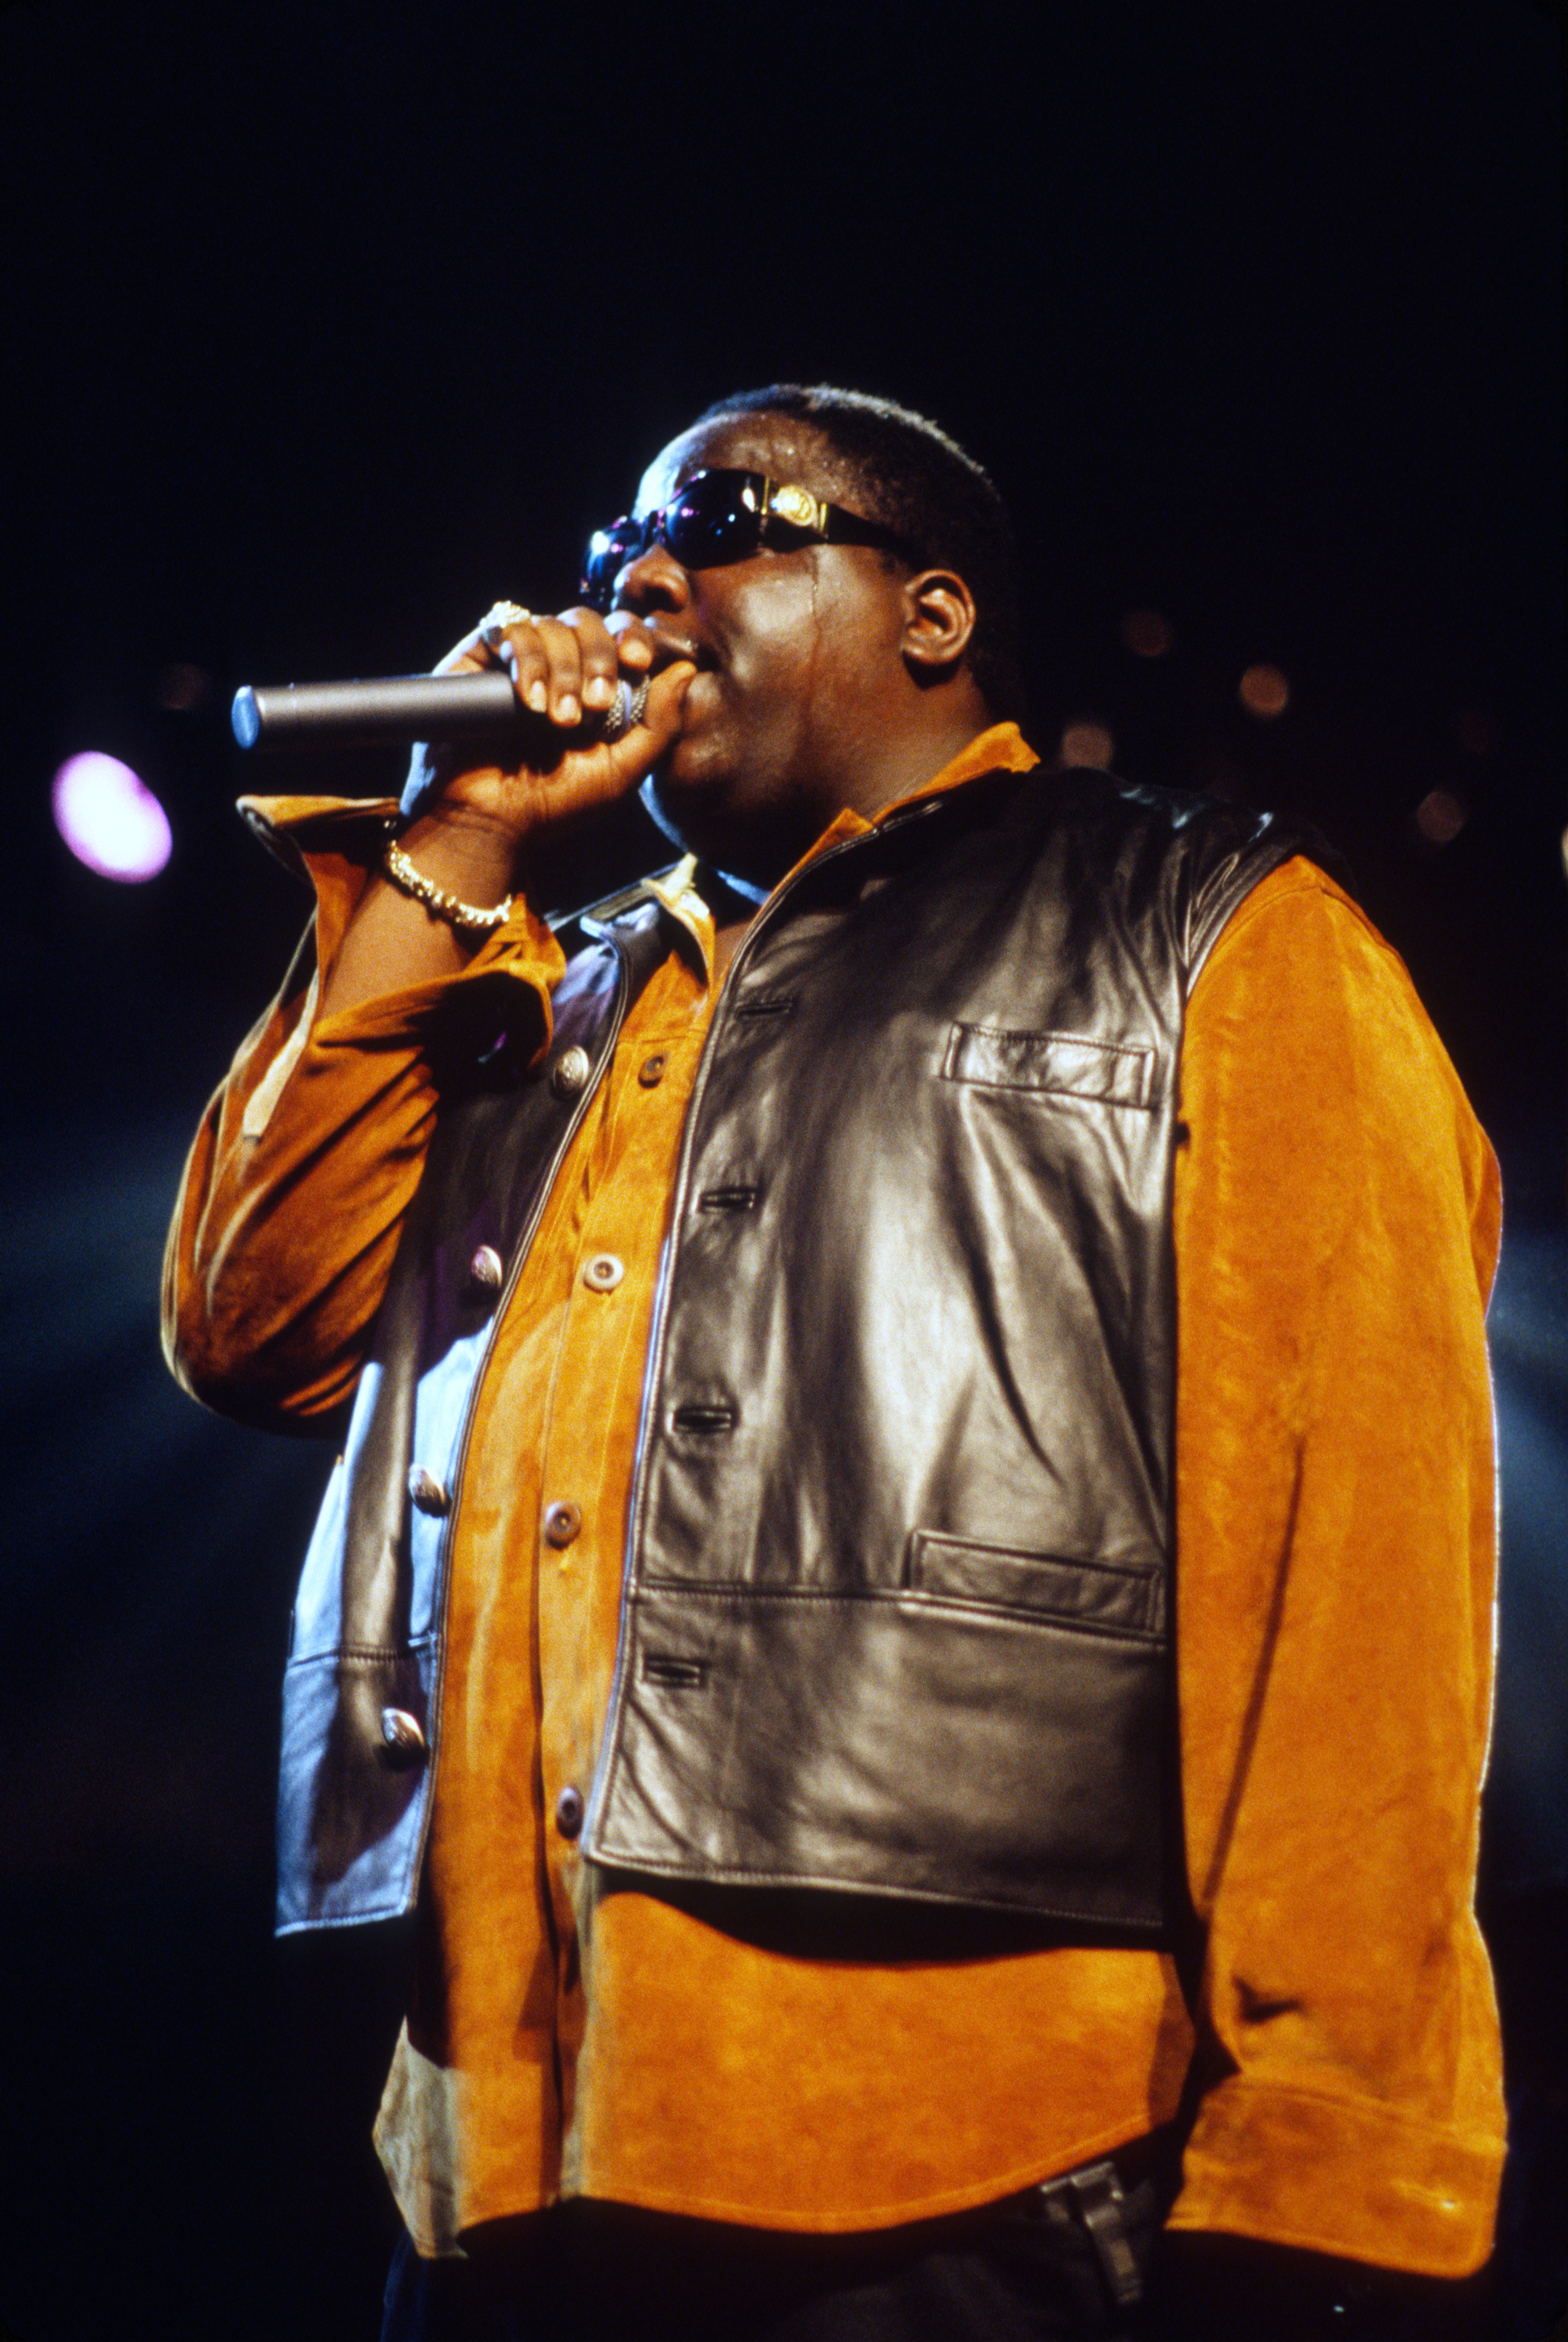  Biggie Smalls/Notorious B.I.G. / Juicy Lyrics INSPIRED